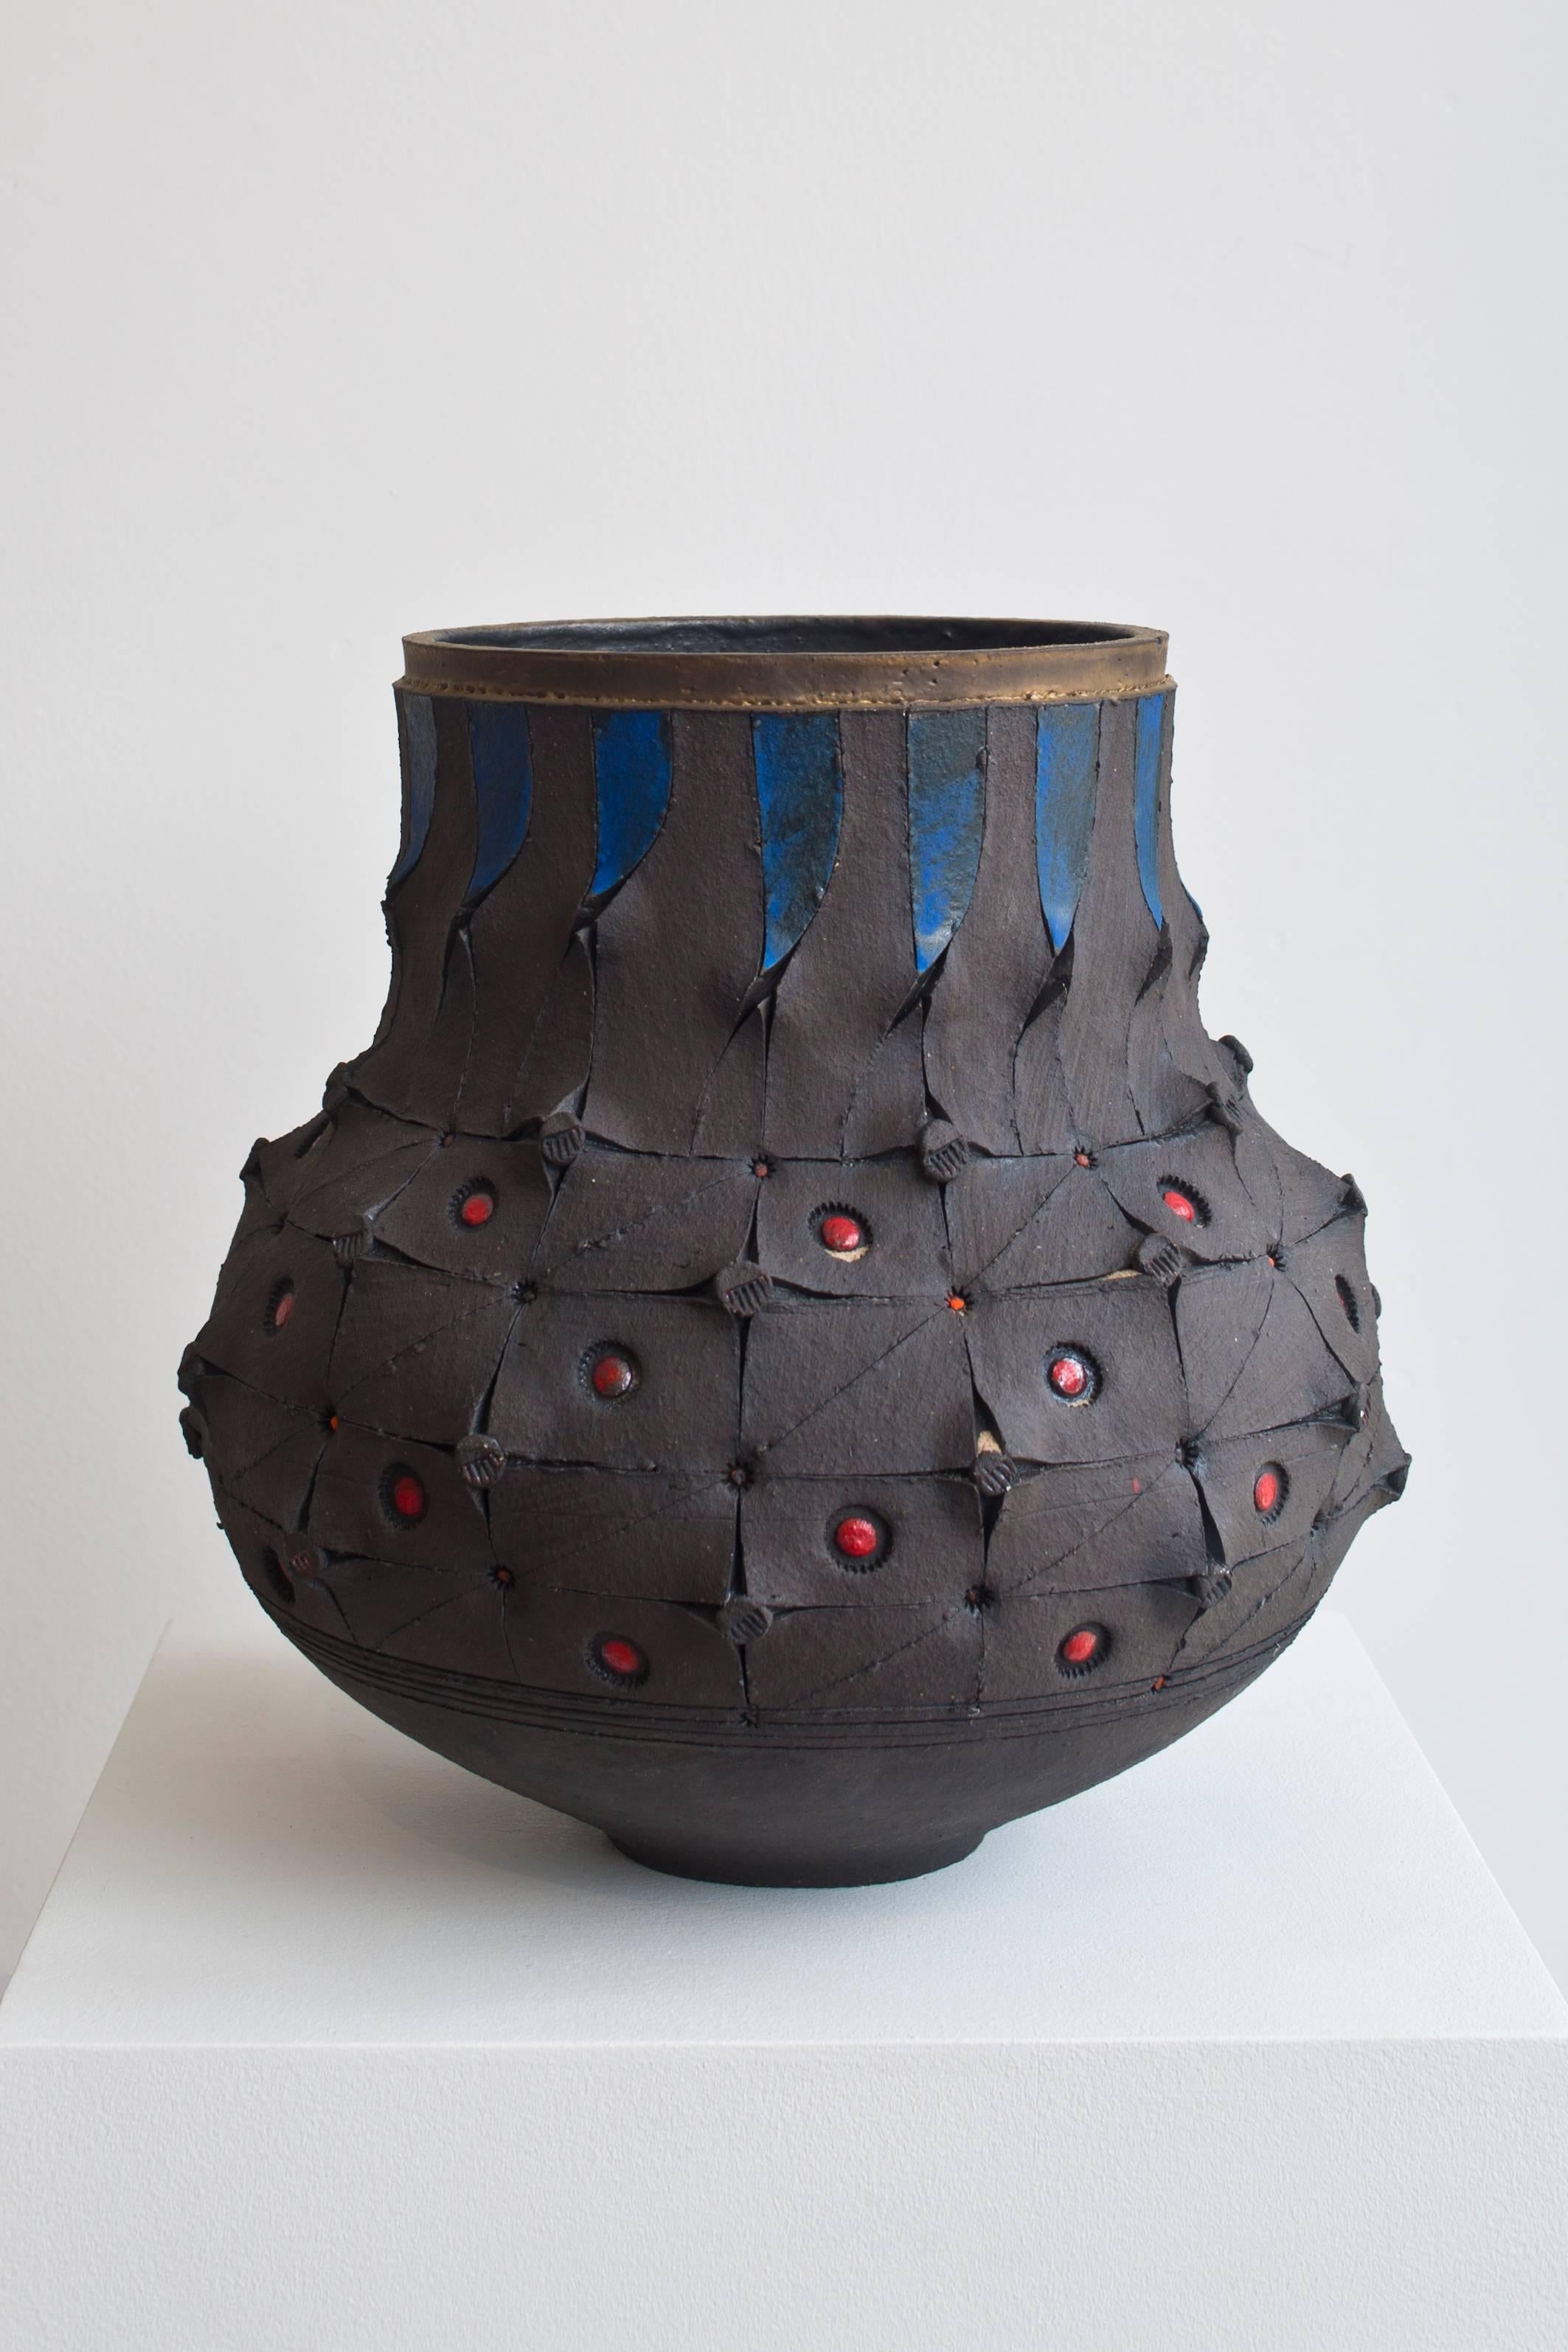 Andile Dyalvane Abstract Sculpture - Scarified Honeycomb Udu Vase